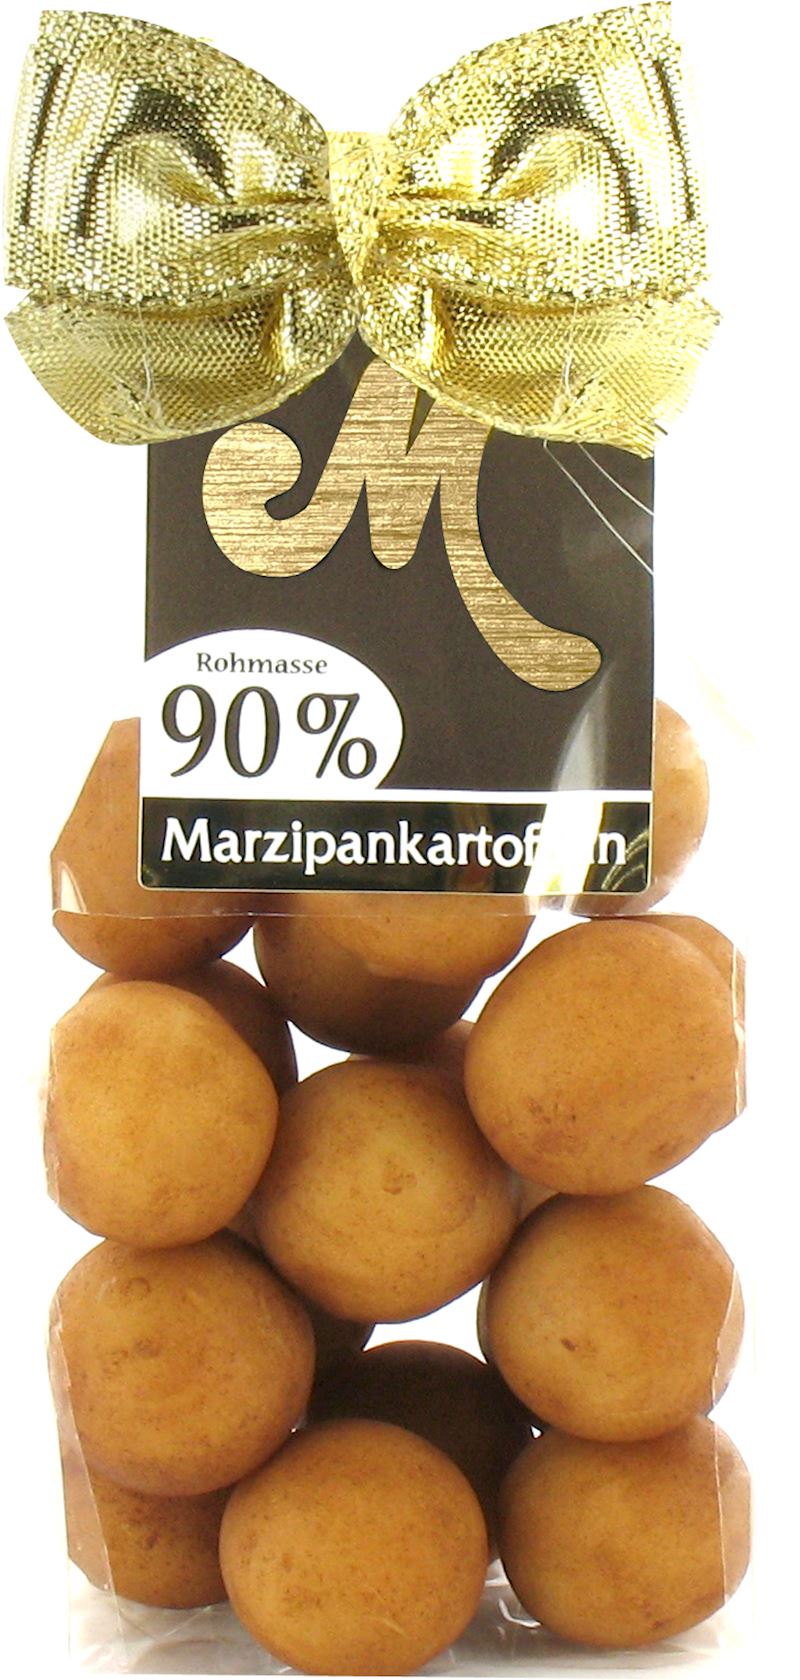 Marzipan Kartoffeln 150g im Beutel Premium Quality